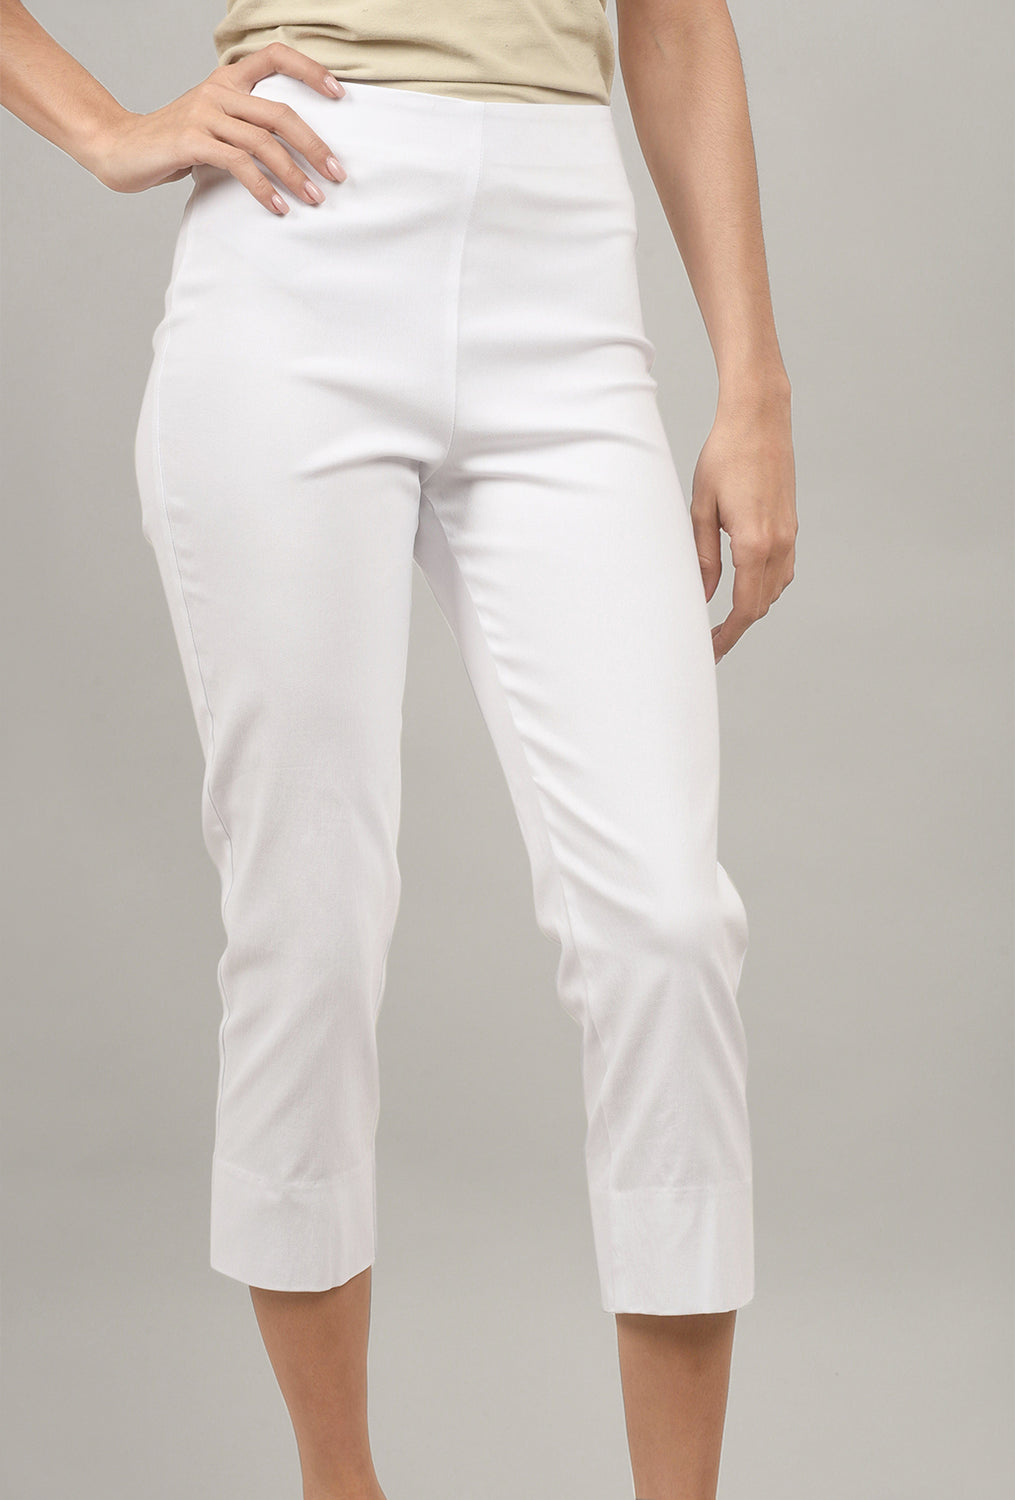 White Capri Pants Elastic Waist  Women White Capri Pants Summer - 2023  Women's - Aliexpress